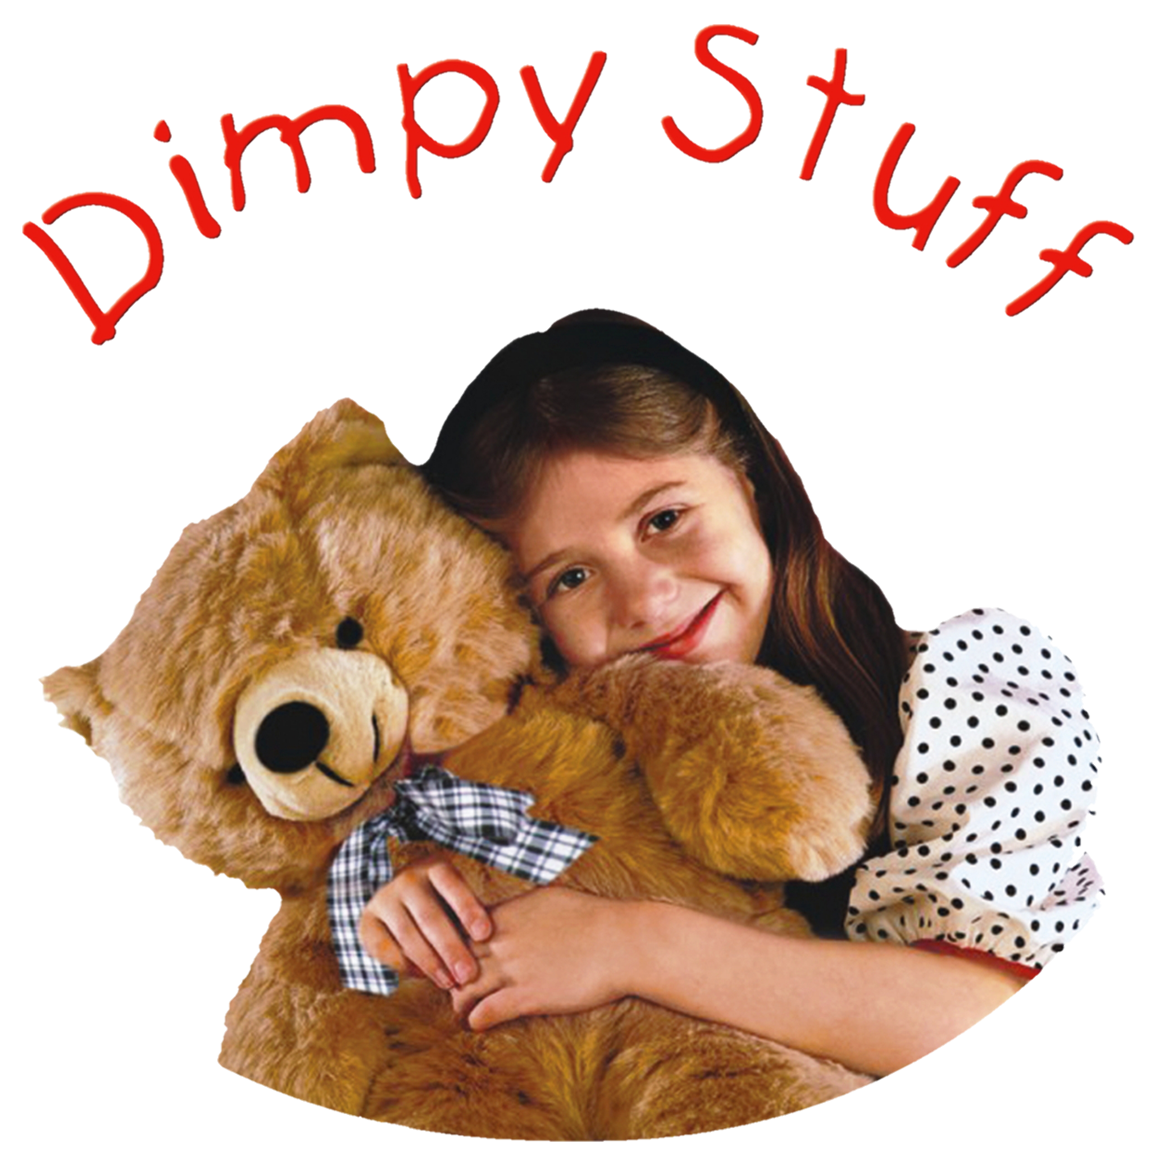 Dimpy Stuff Toys